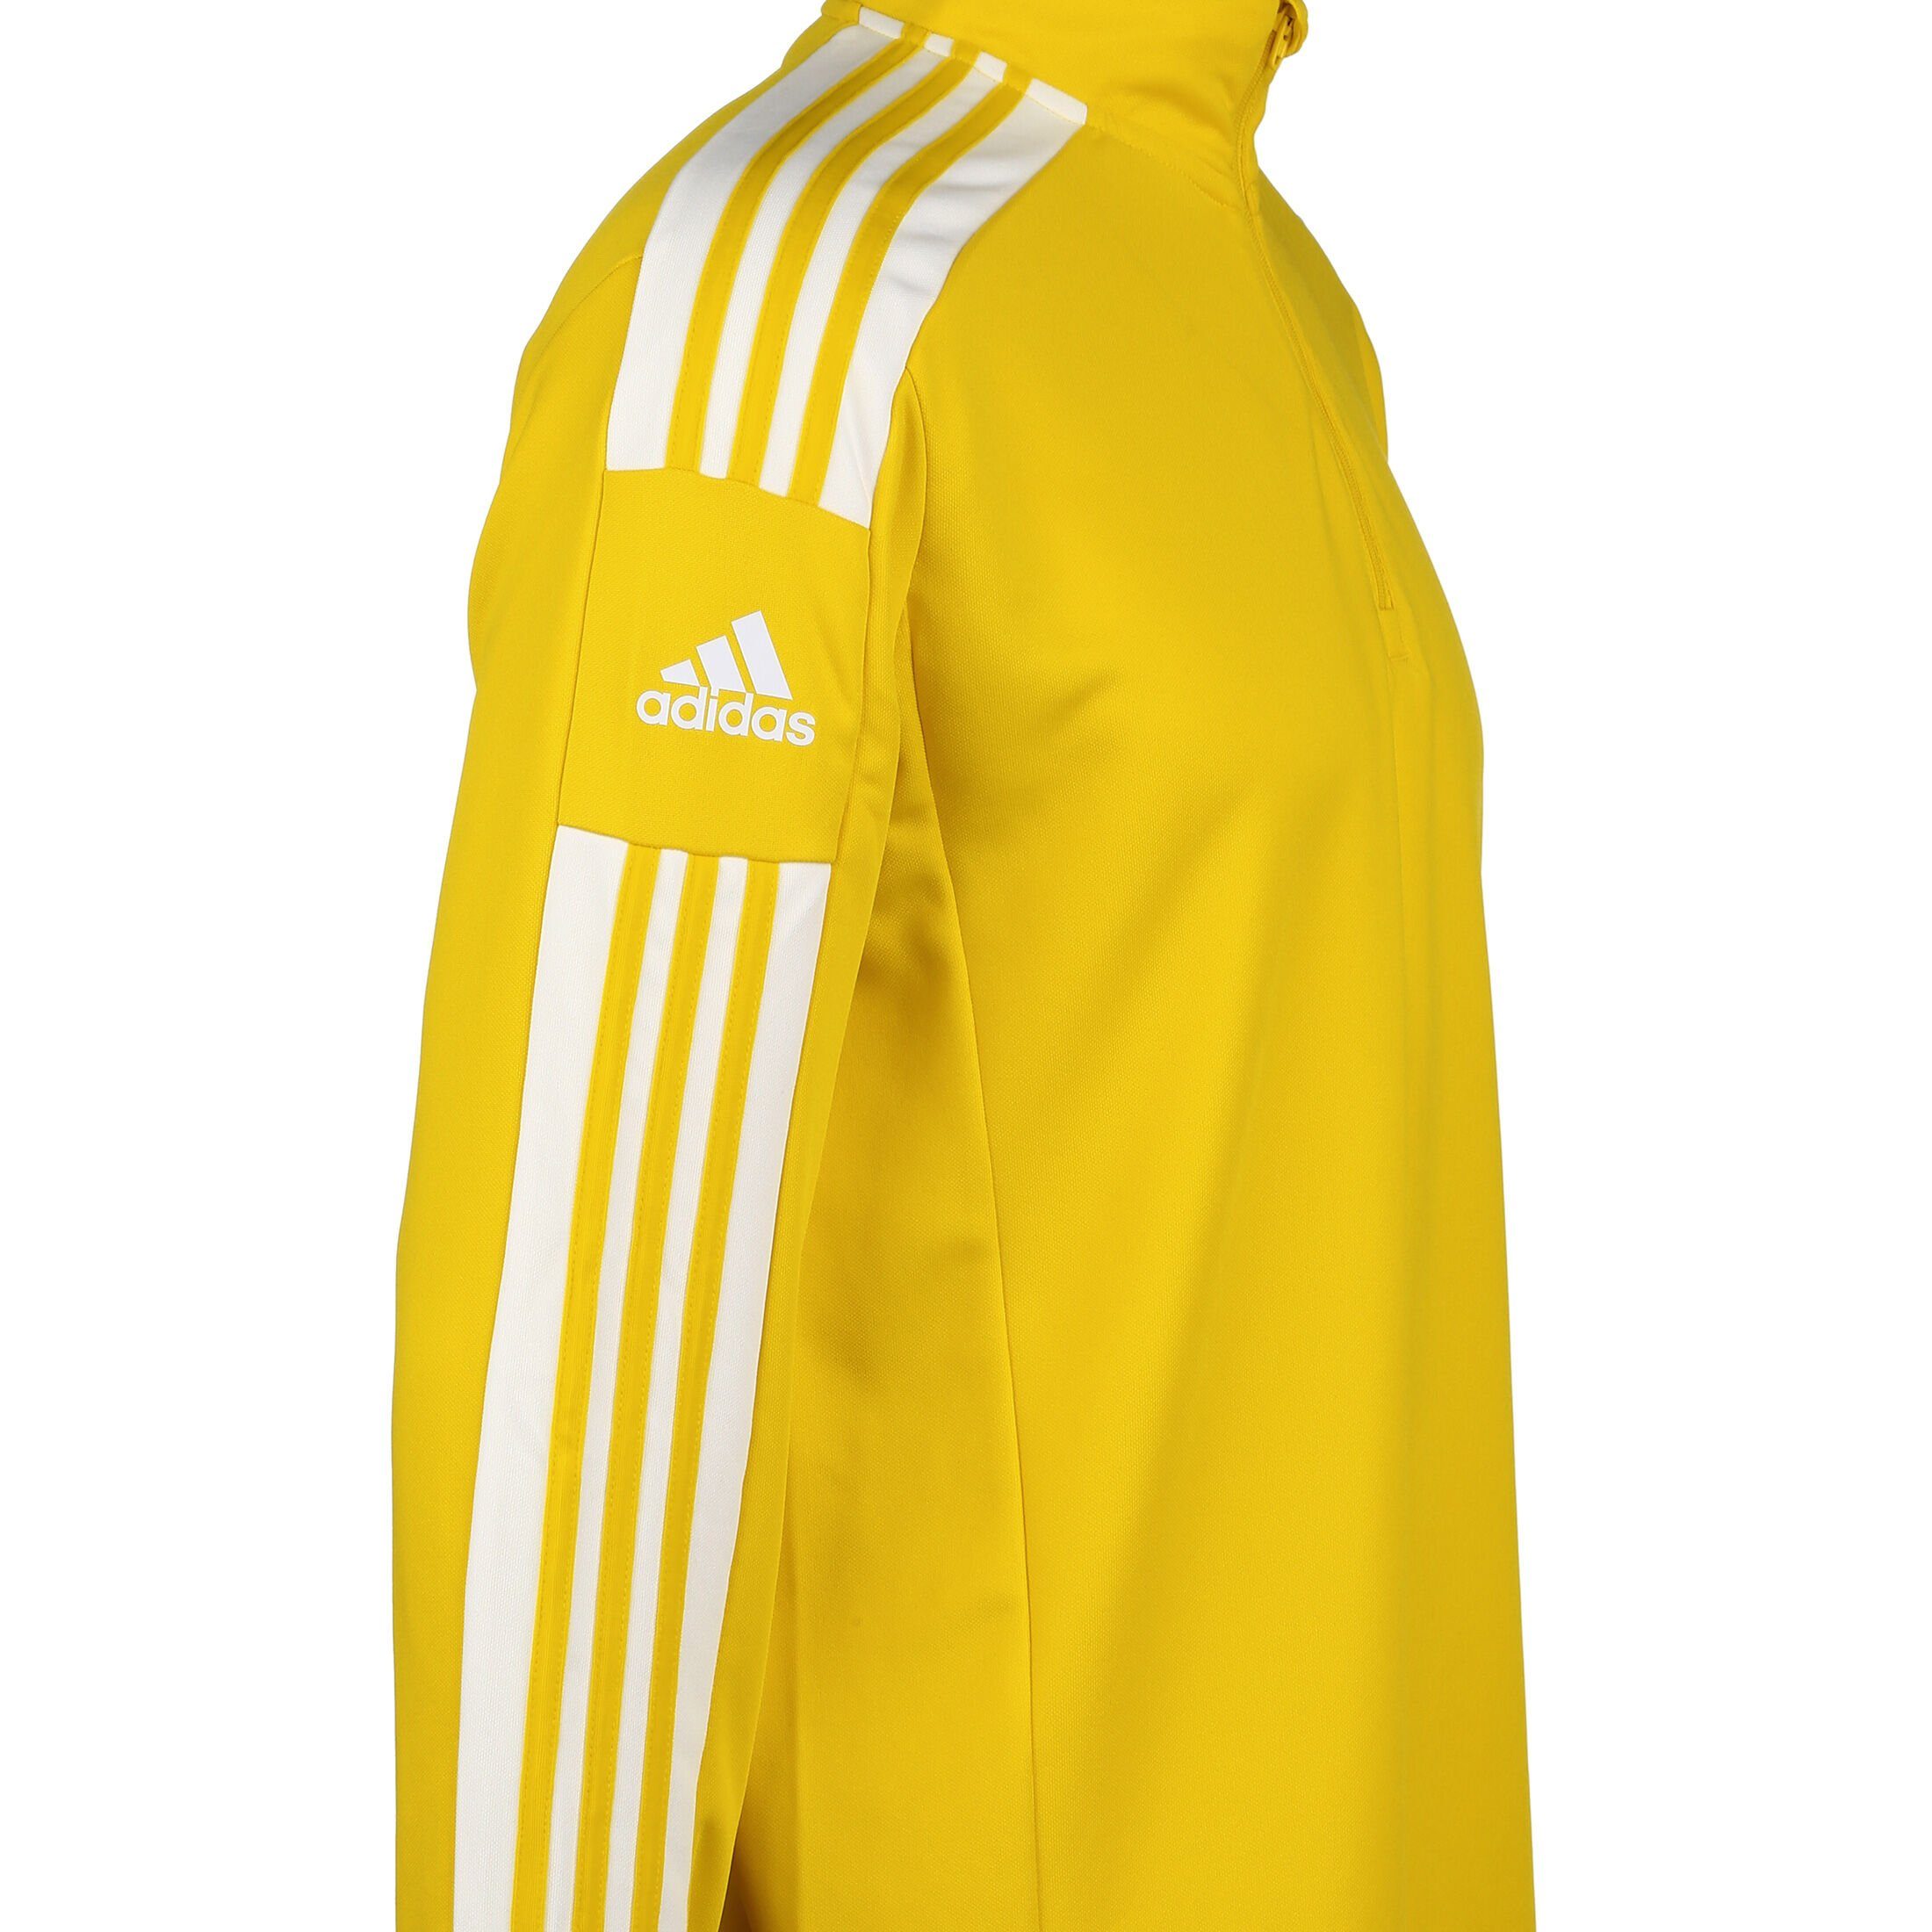 Performance 21 Sweatshirt / Herren weiß Trainingssweat gelb Squadra adidas